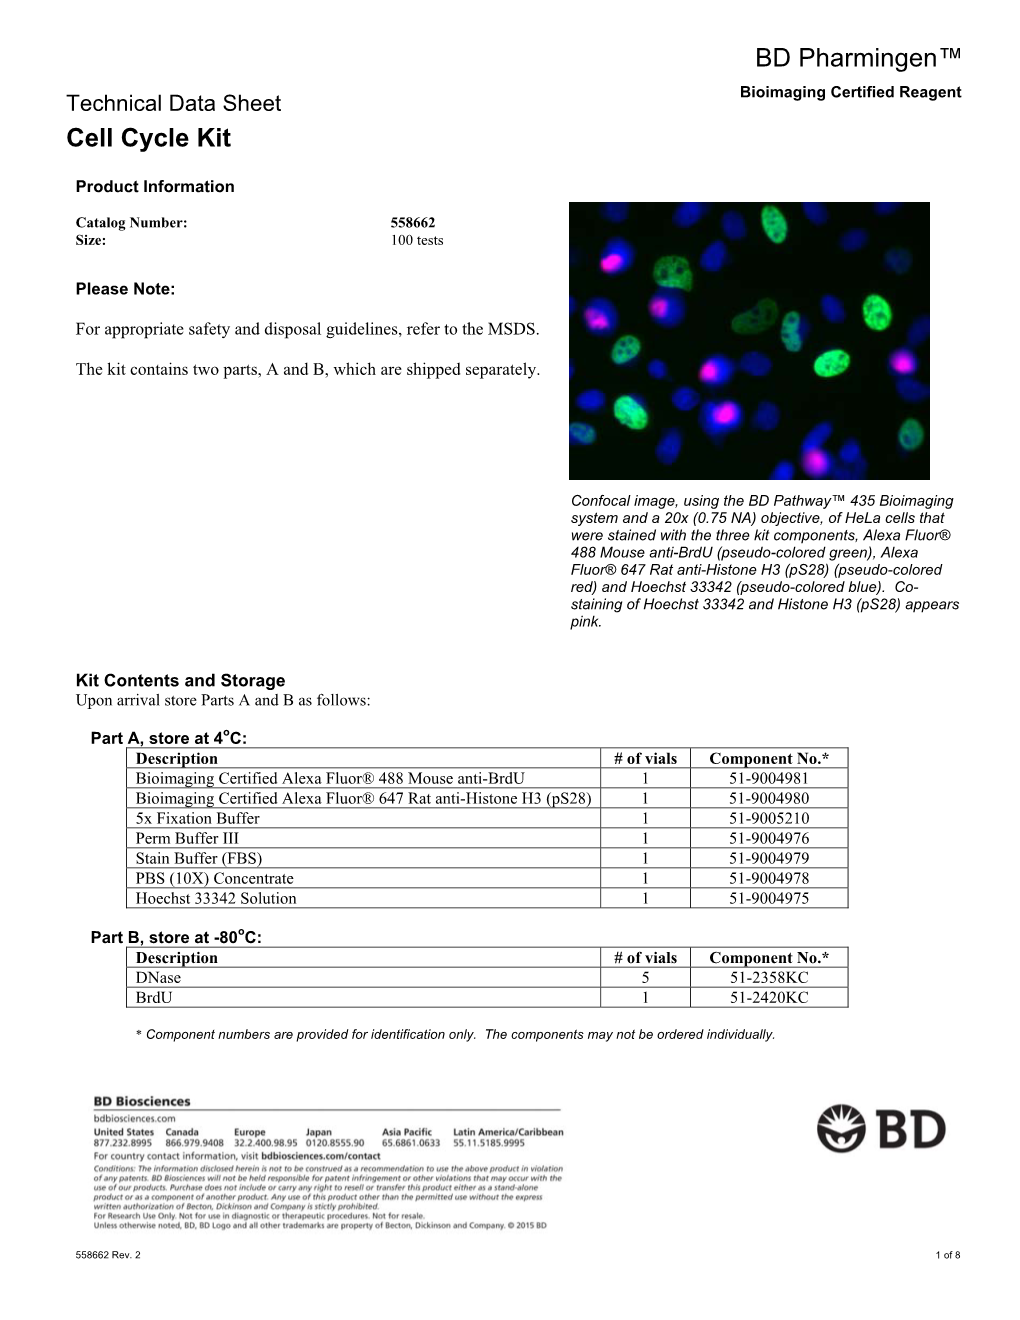 BD Pharmingen™ Cell Cycle